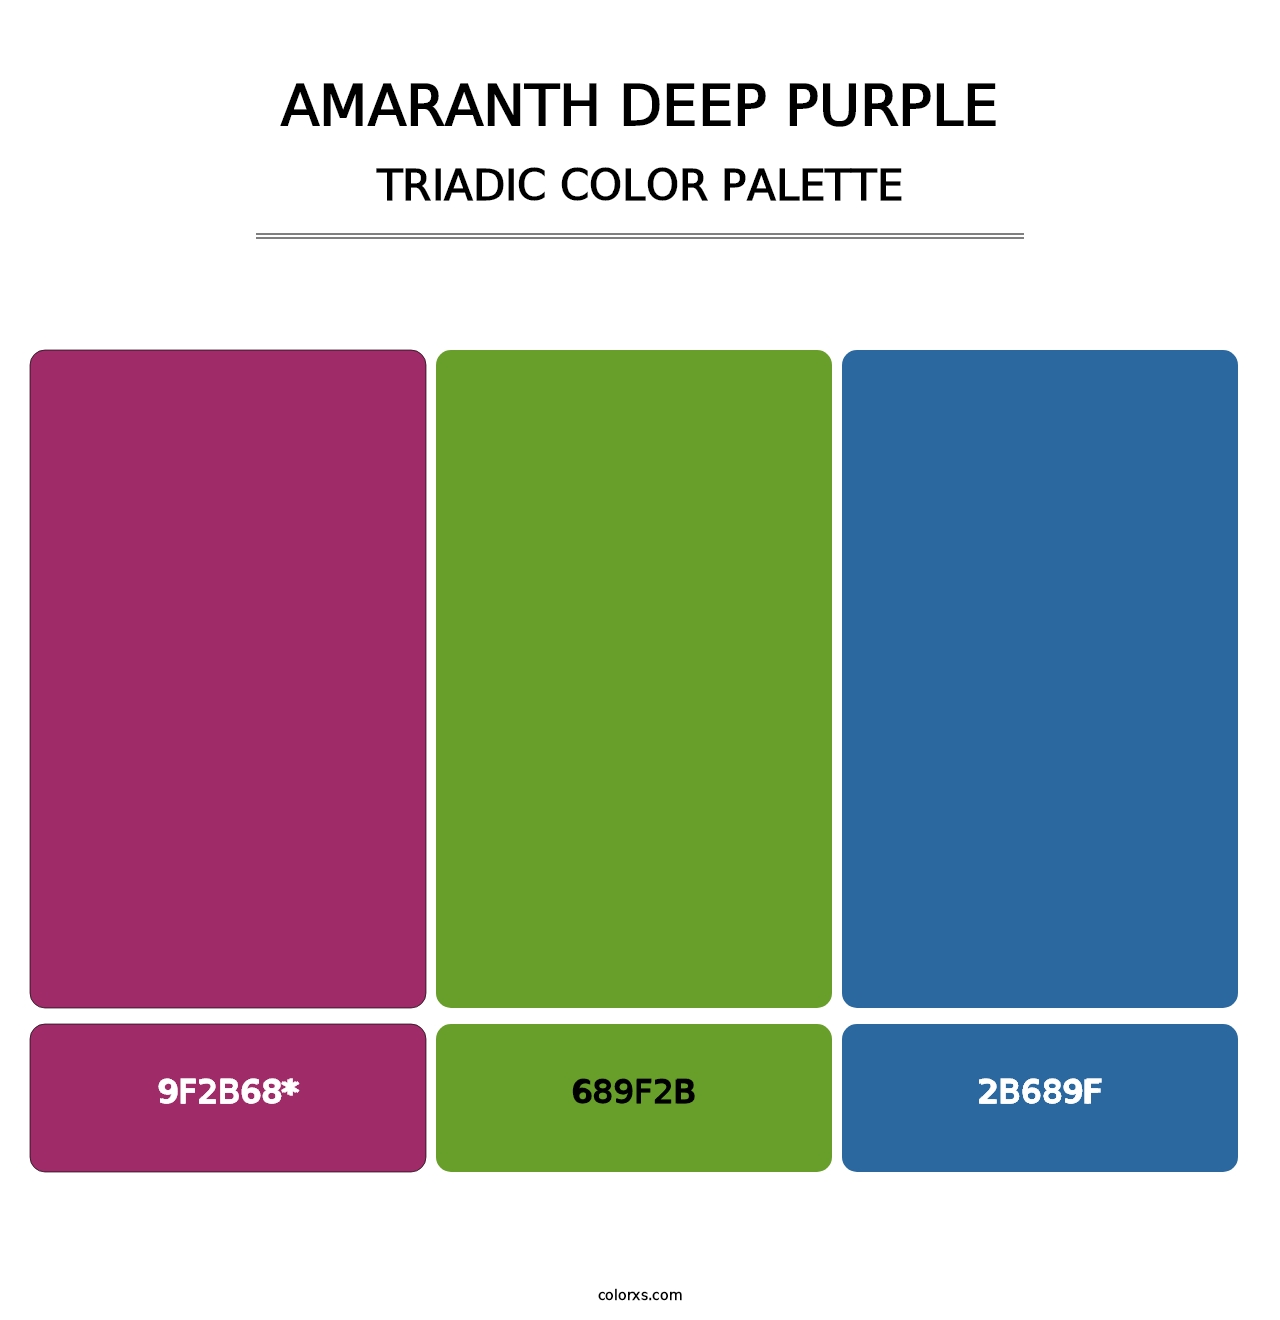 Amaranth Deep Purple - Triadic Color Palette